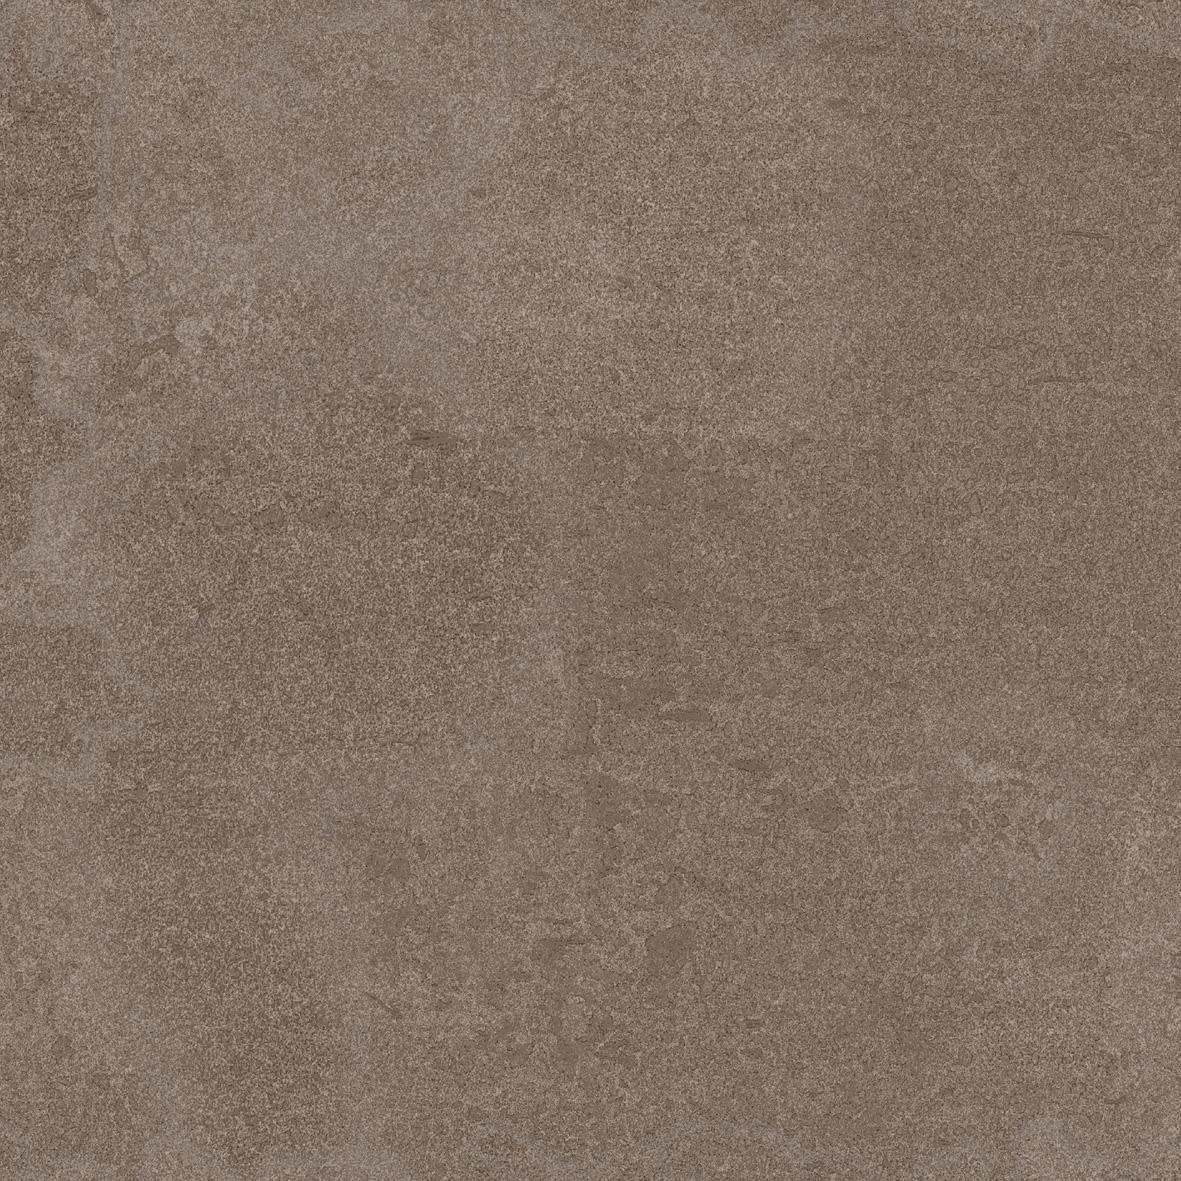 Brown Tiles for Bathroom Tiles, Outdoor/Terrace